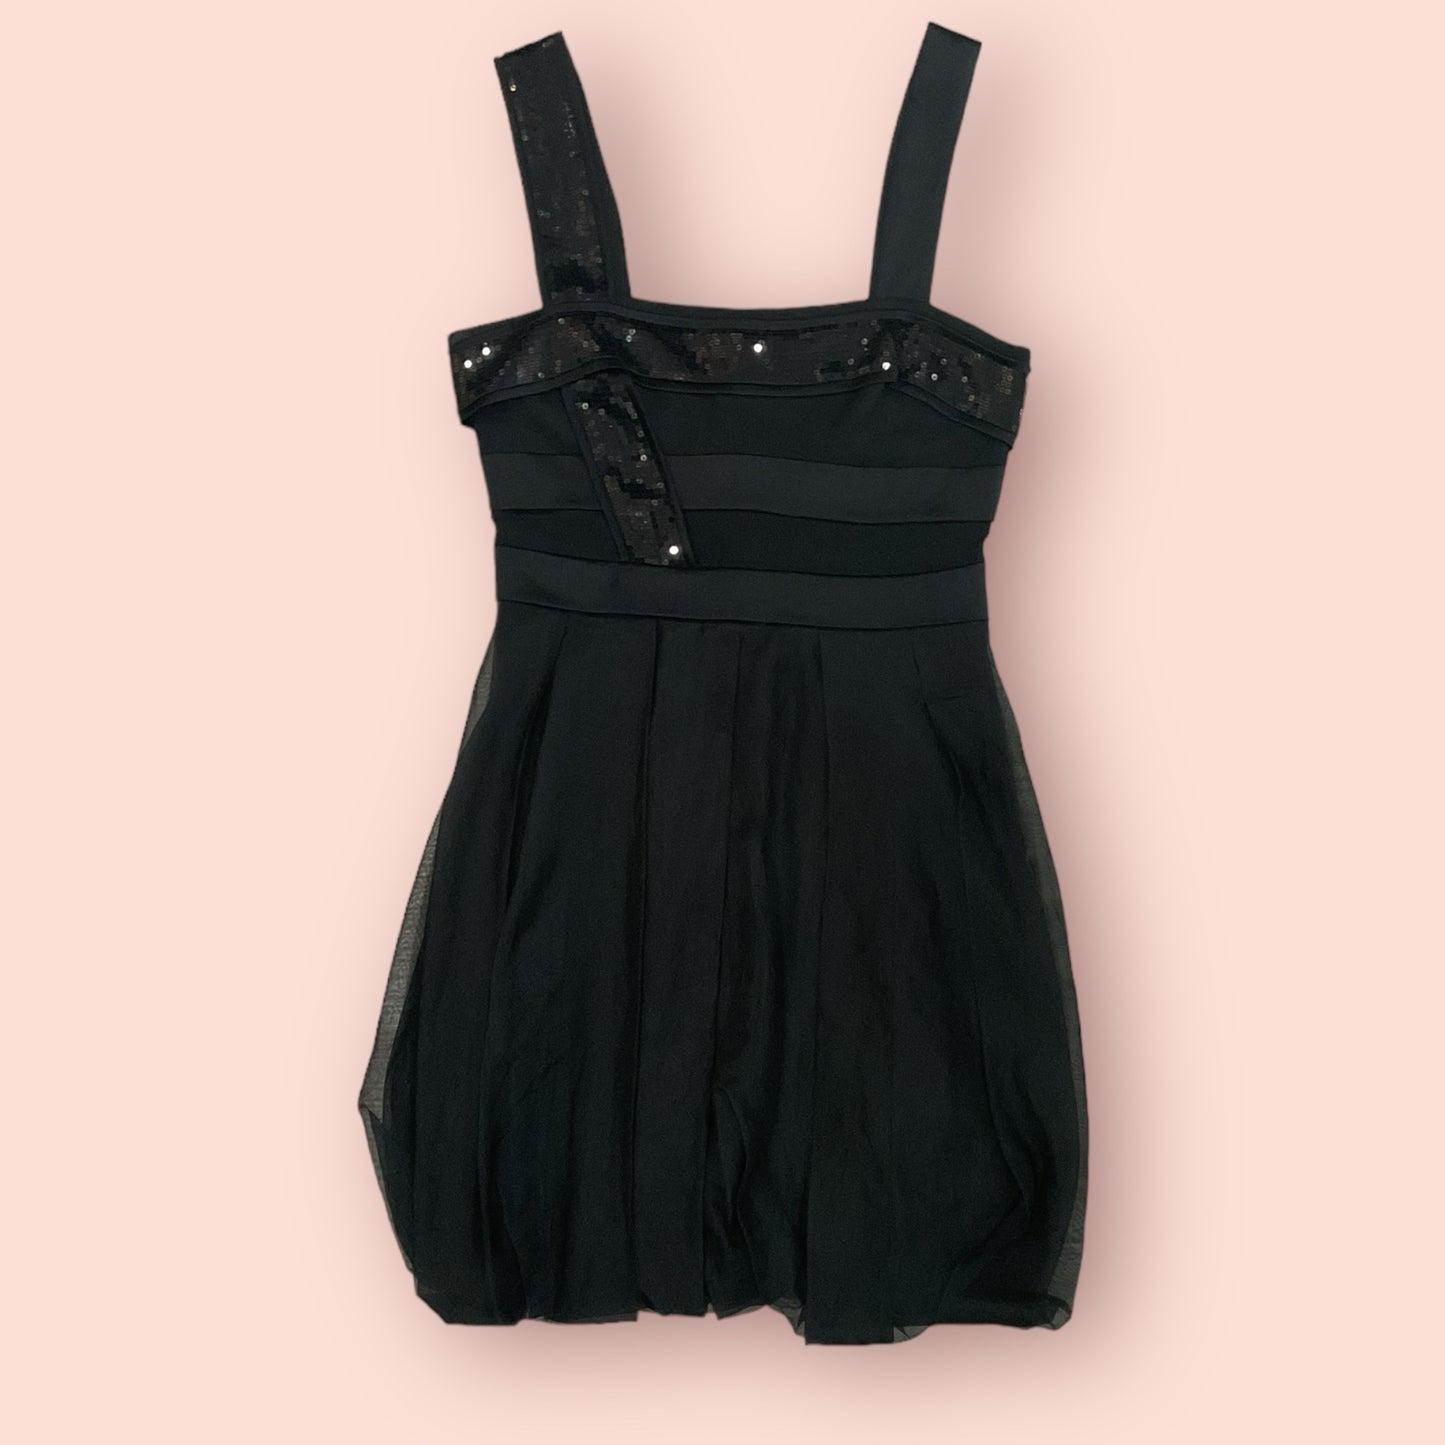 Bebe Size S Like New Black Dress